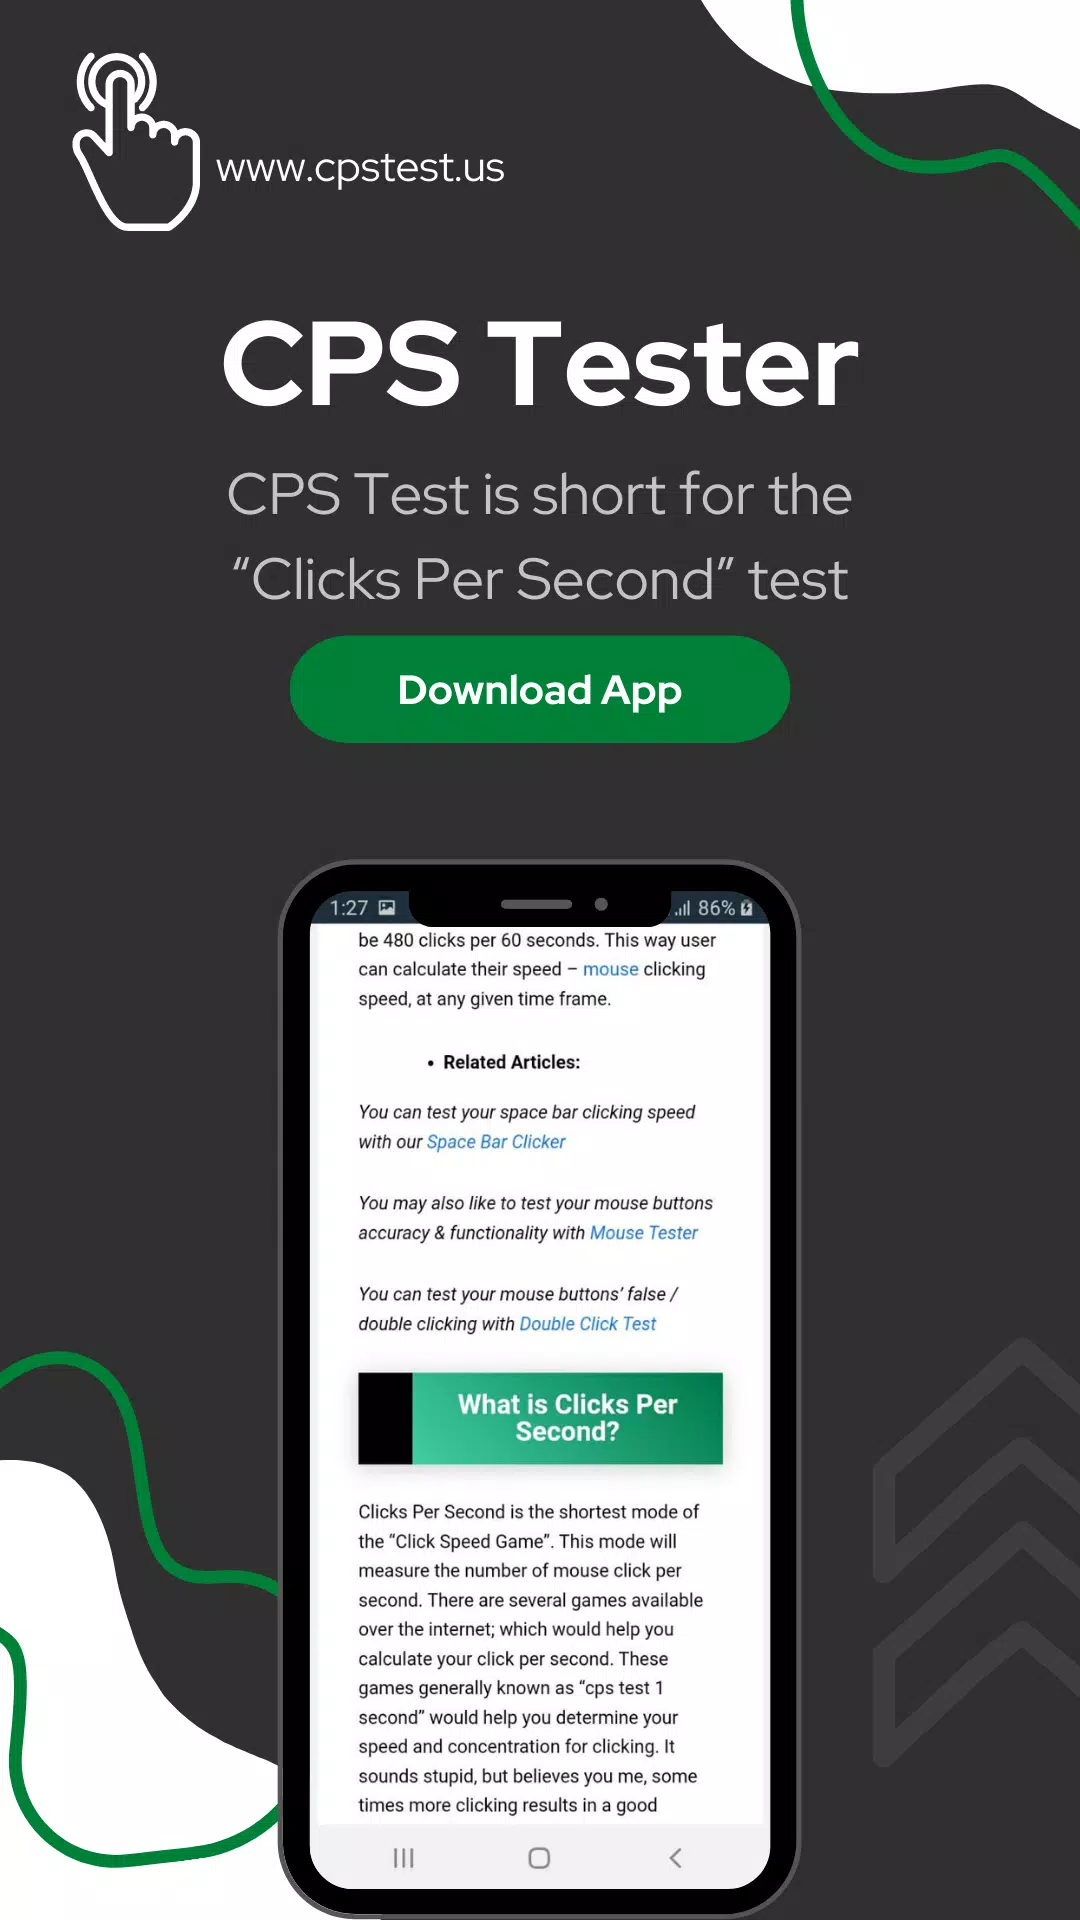 1 Second CPS Test - ClicksPerSecond